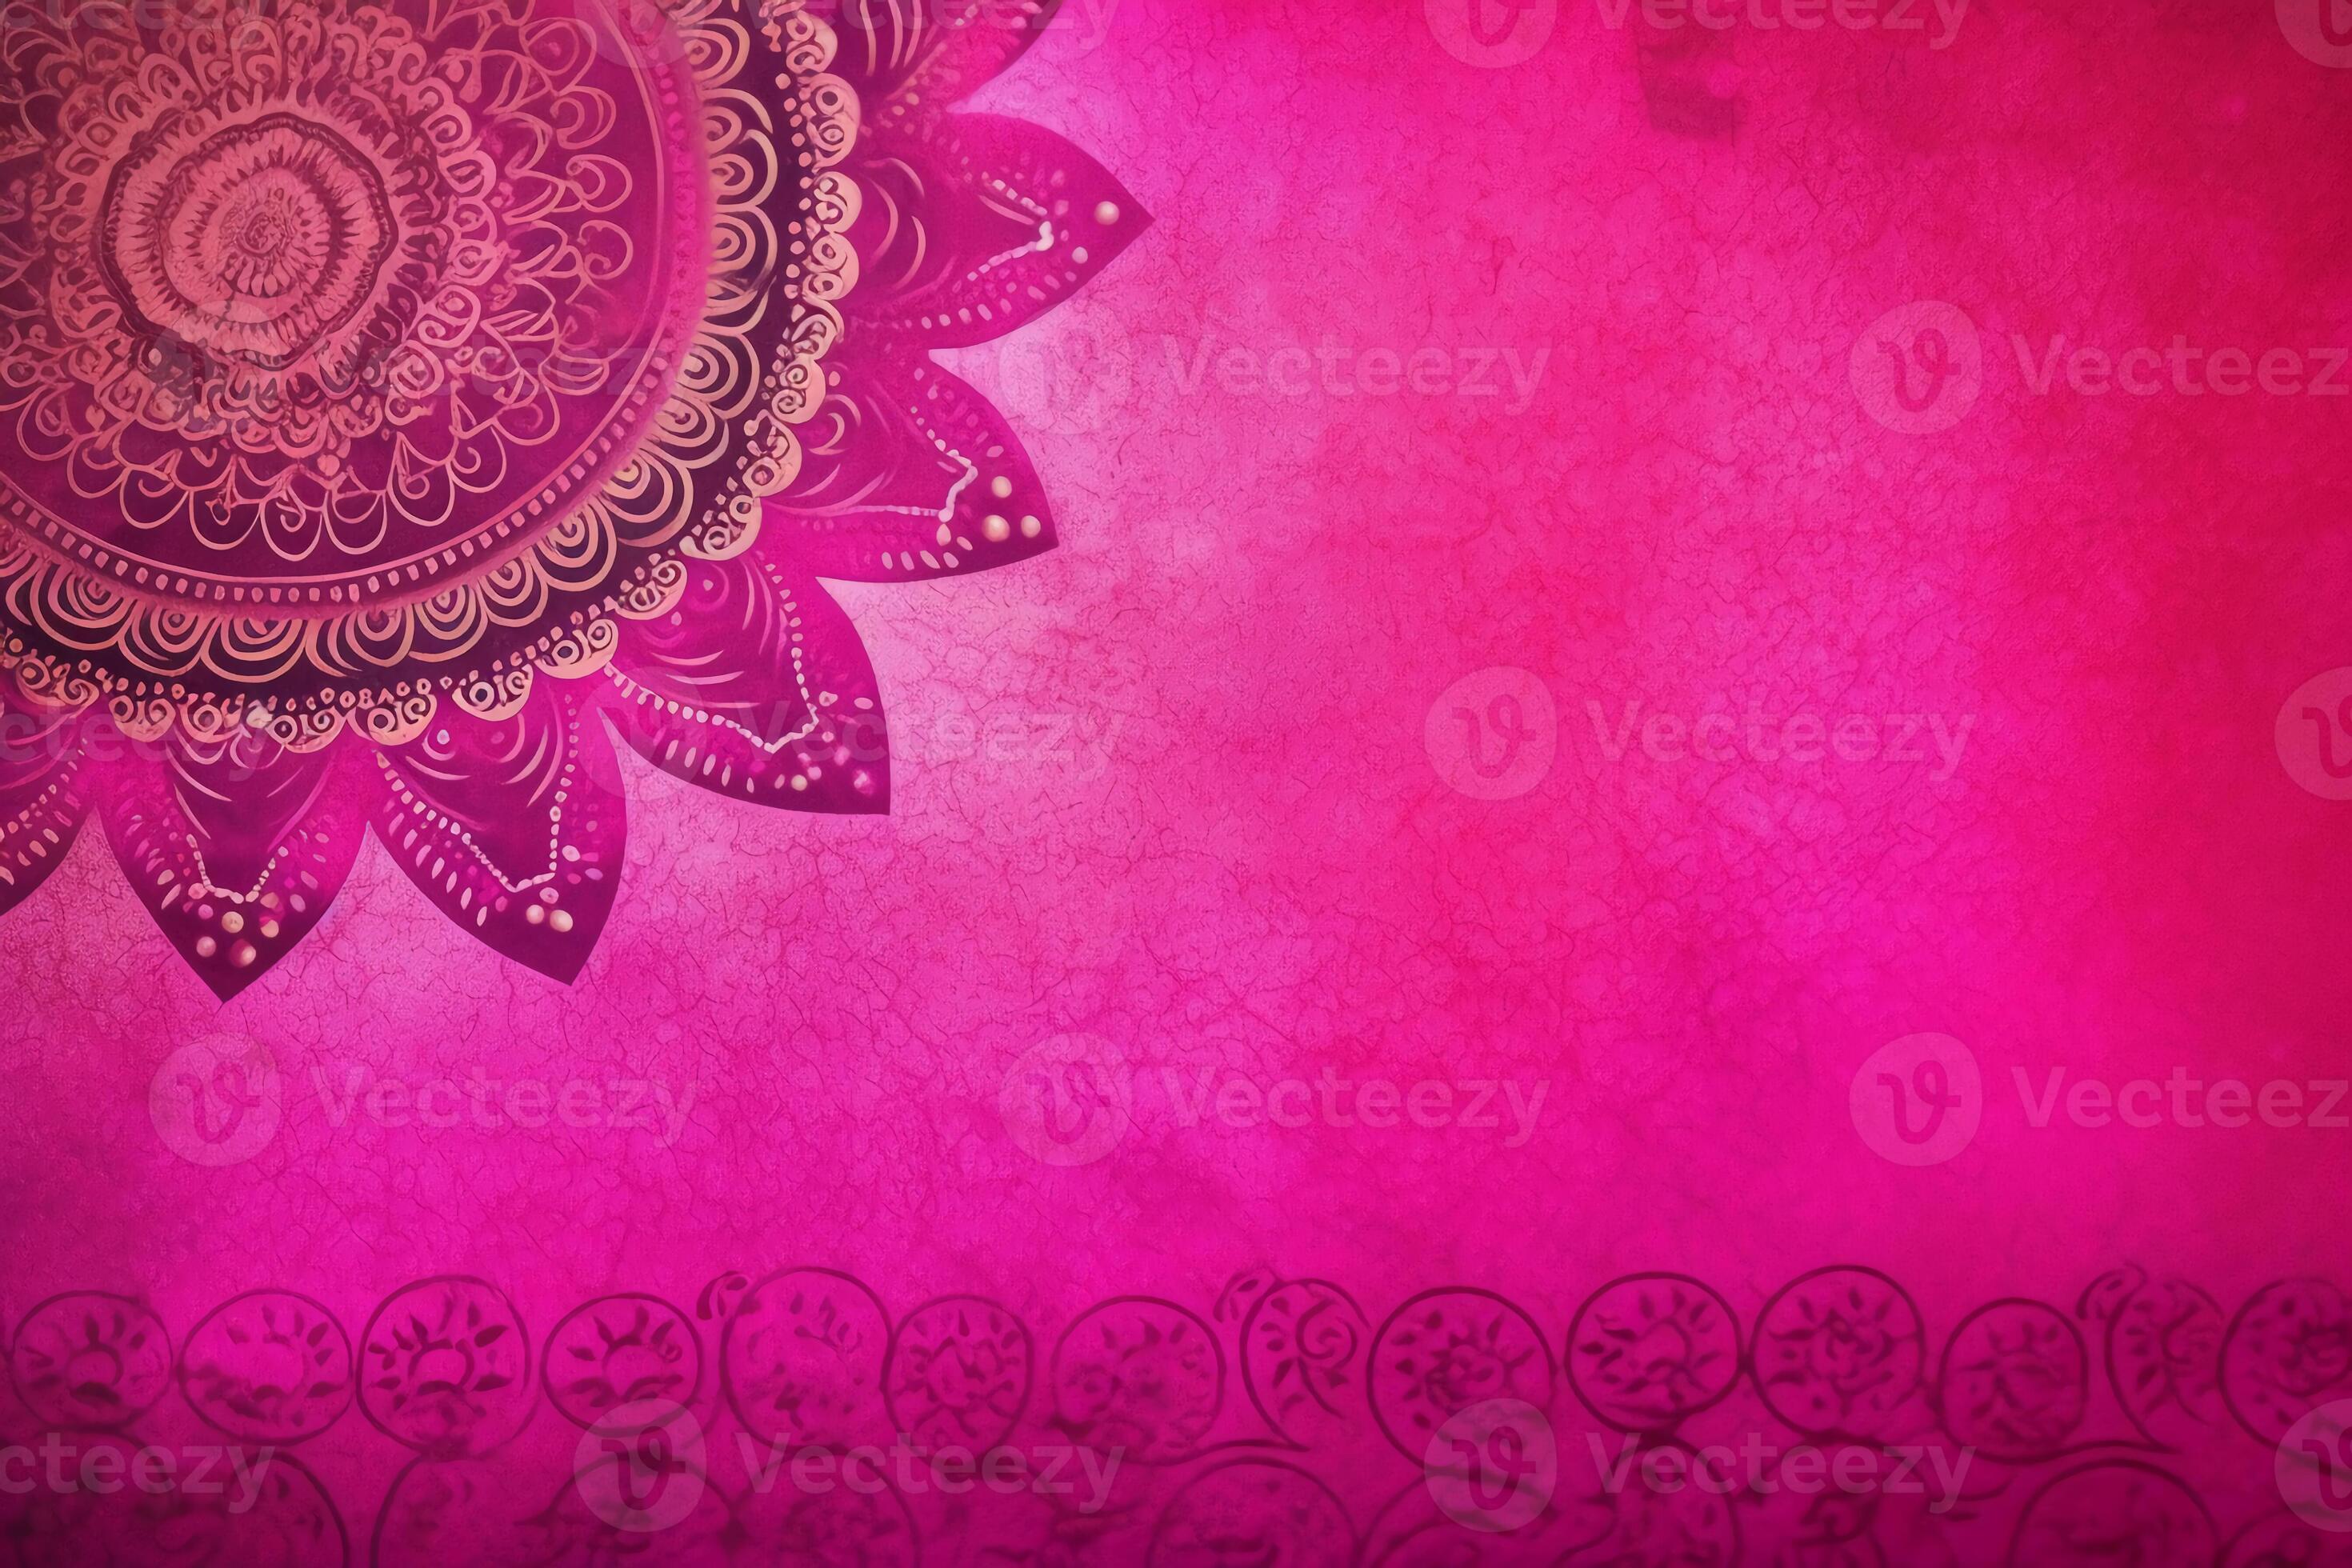 Fuchsia Crayola color background paper texture Rangoli pattern painting. AIgenerative 24173912 Stock Photo at Vecteezy